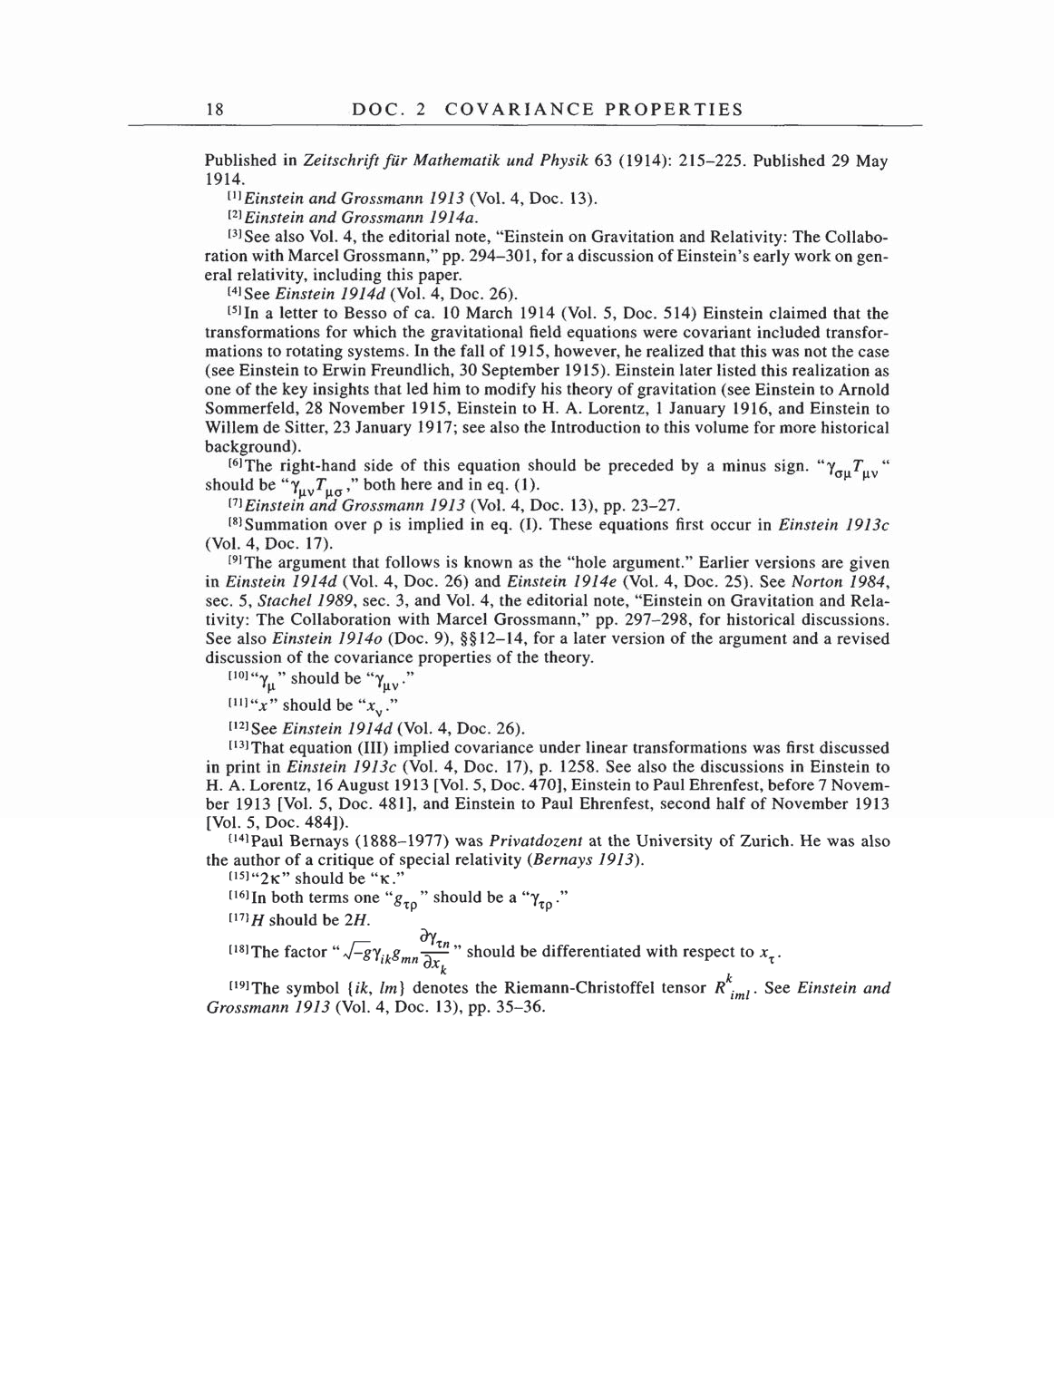 Volume 6: The Berlin Years: Writings, 1914-1917 page 18